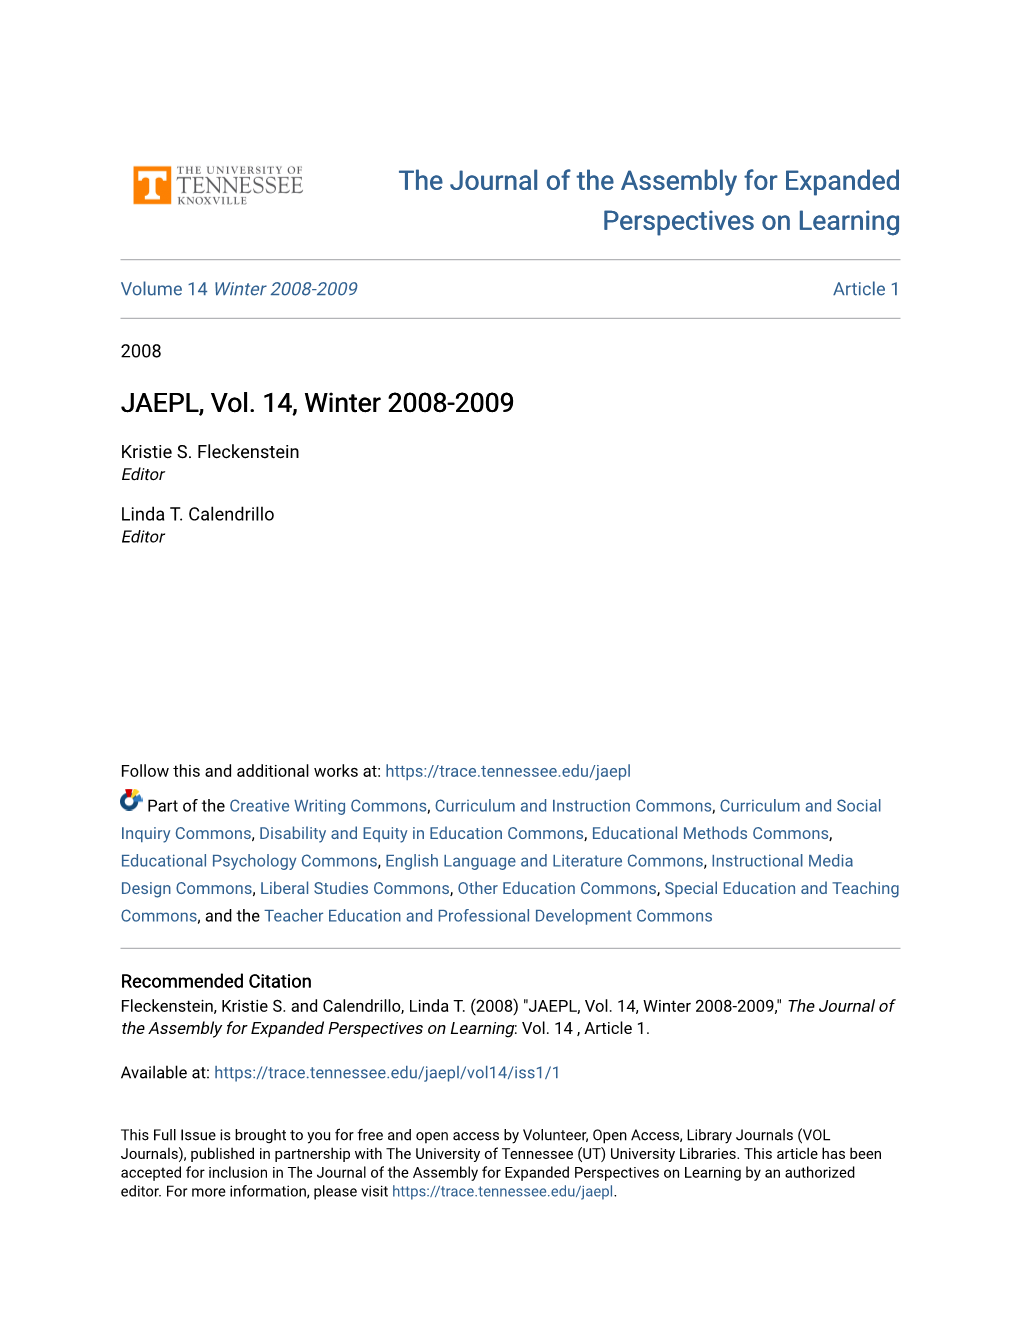 JAEPL, Vol. 14, Winter 2008-2009